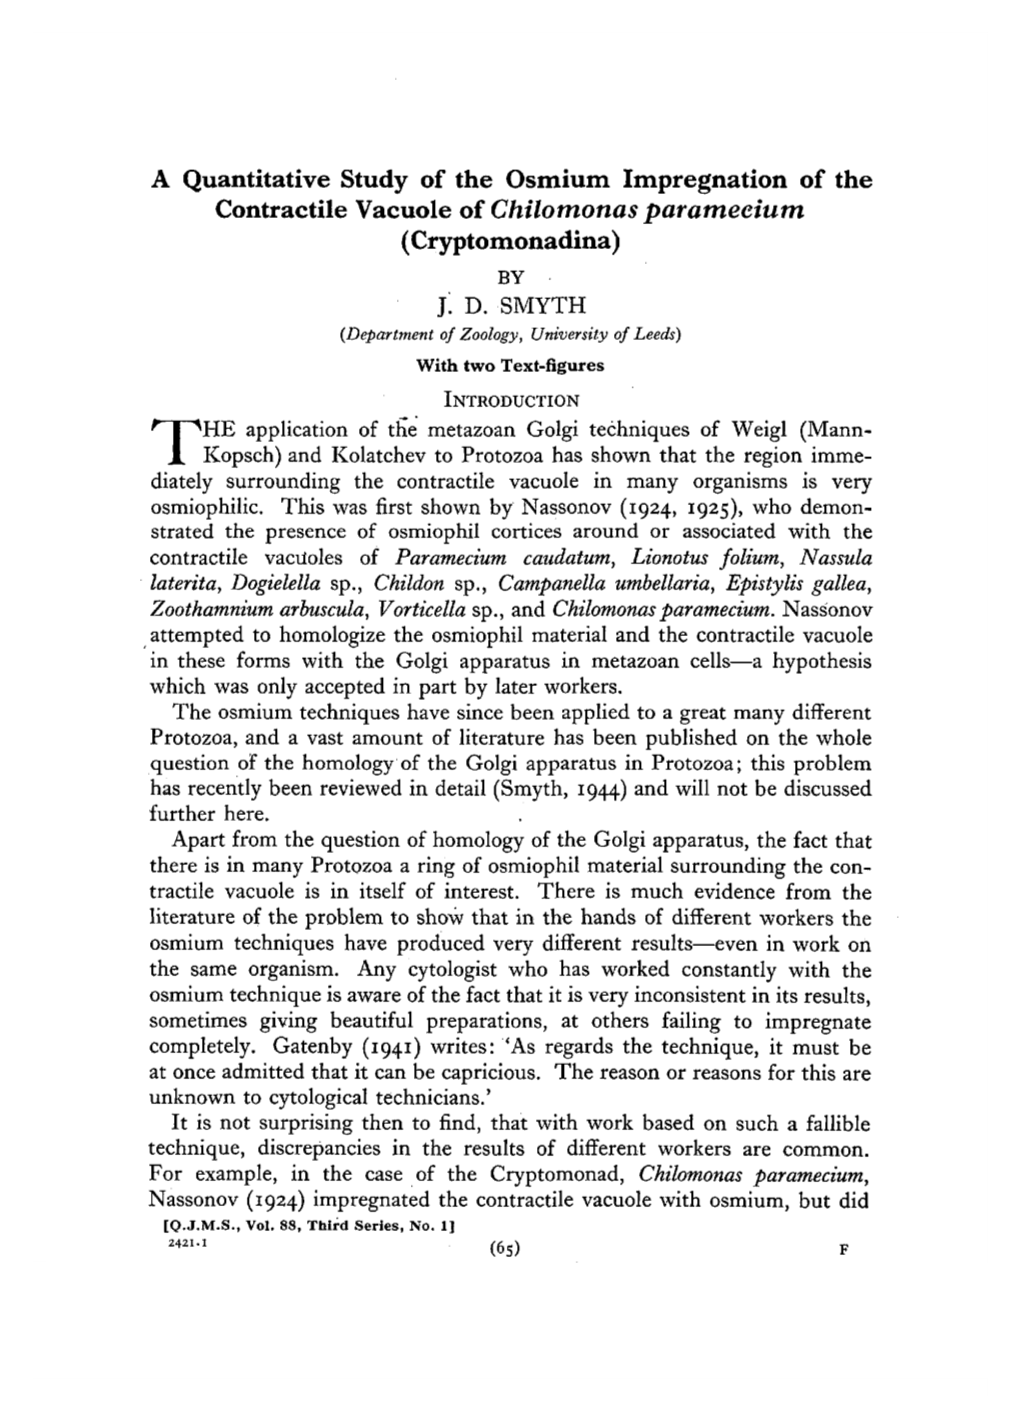 A Quantitative Study of the Osmium Impregnation of the Contractile Vacuole of Chilomonas Paramecium (Cryptomonadina) by ]